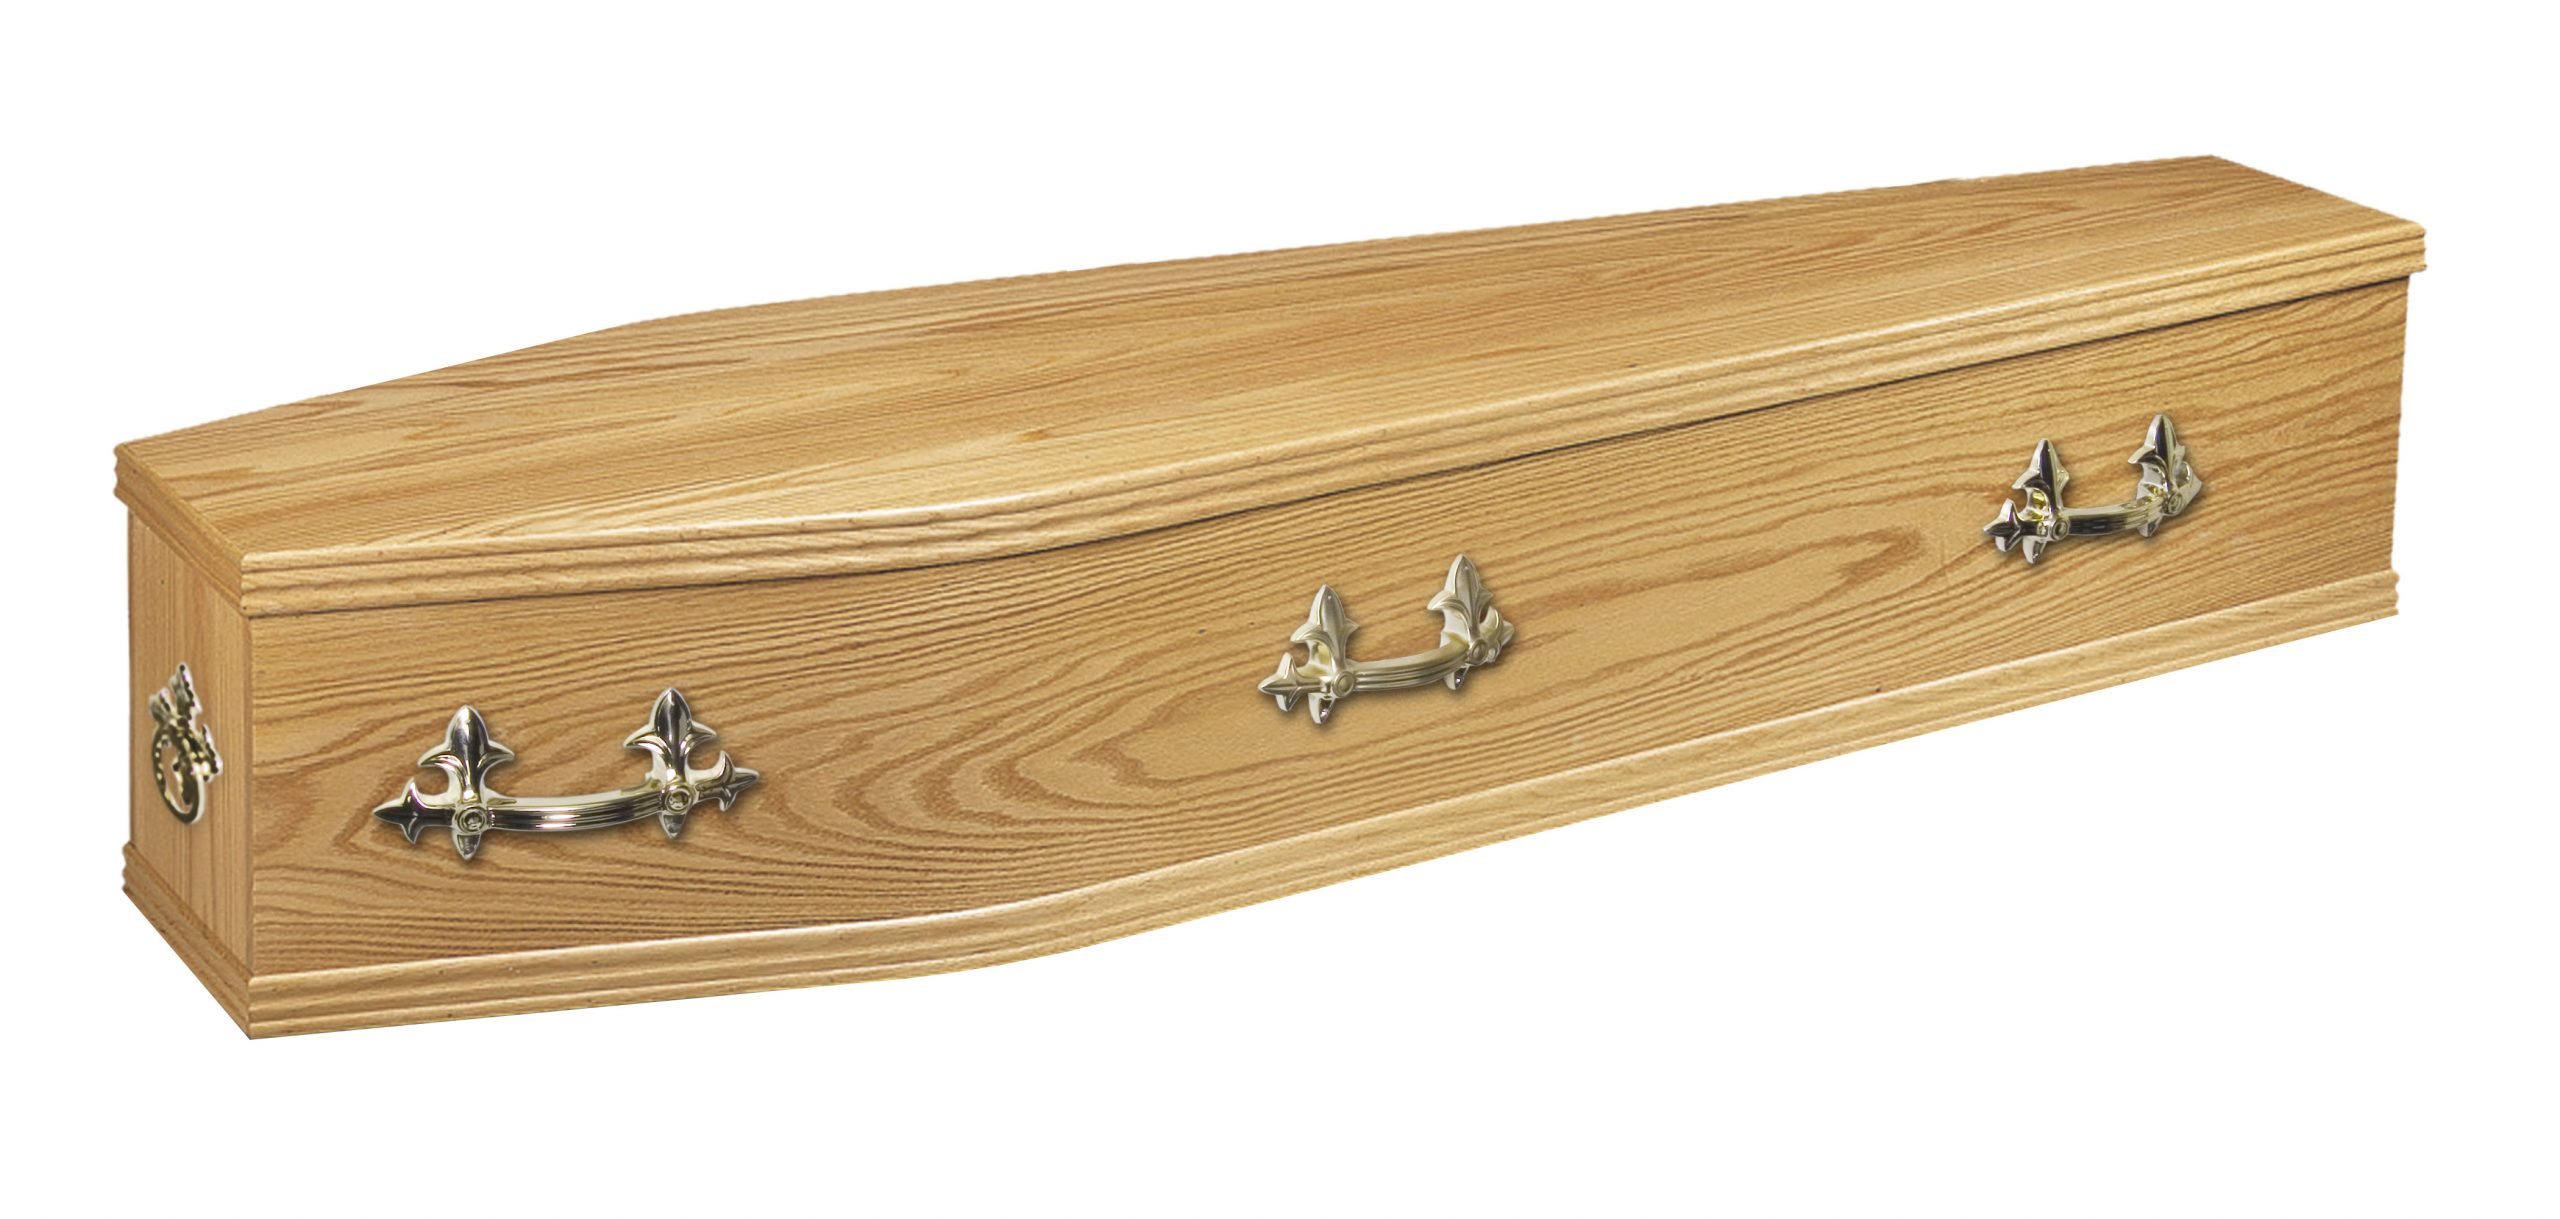 Solid-Windsor-oak coffin